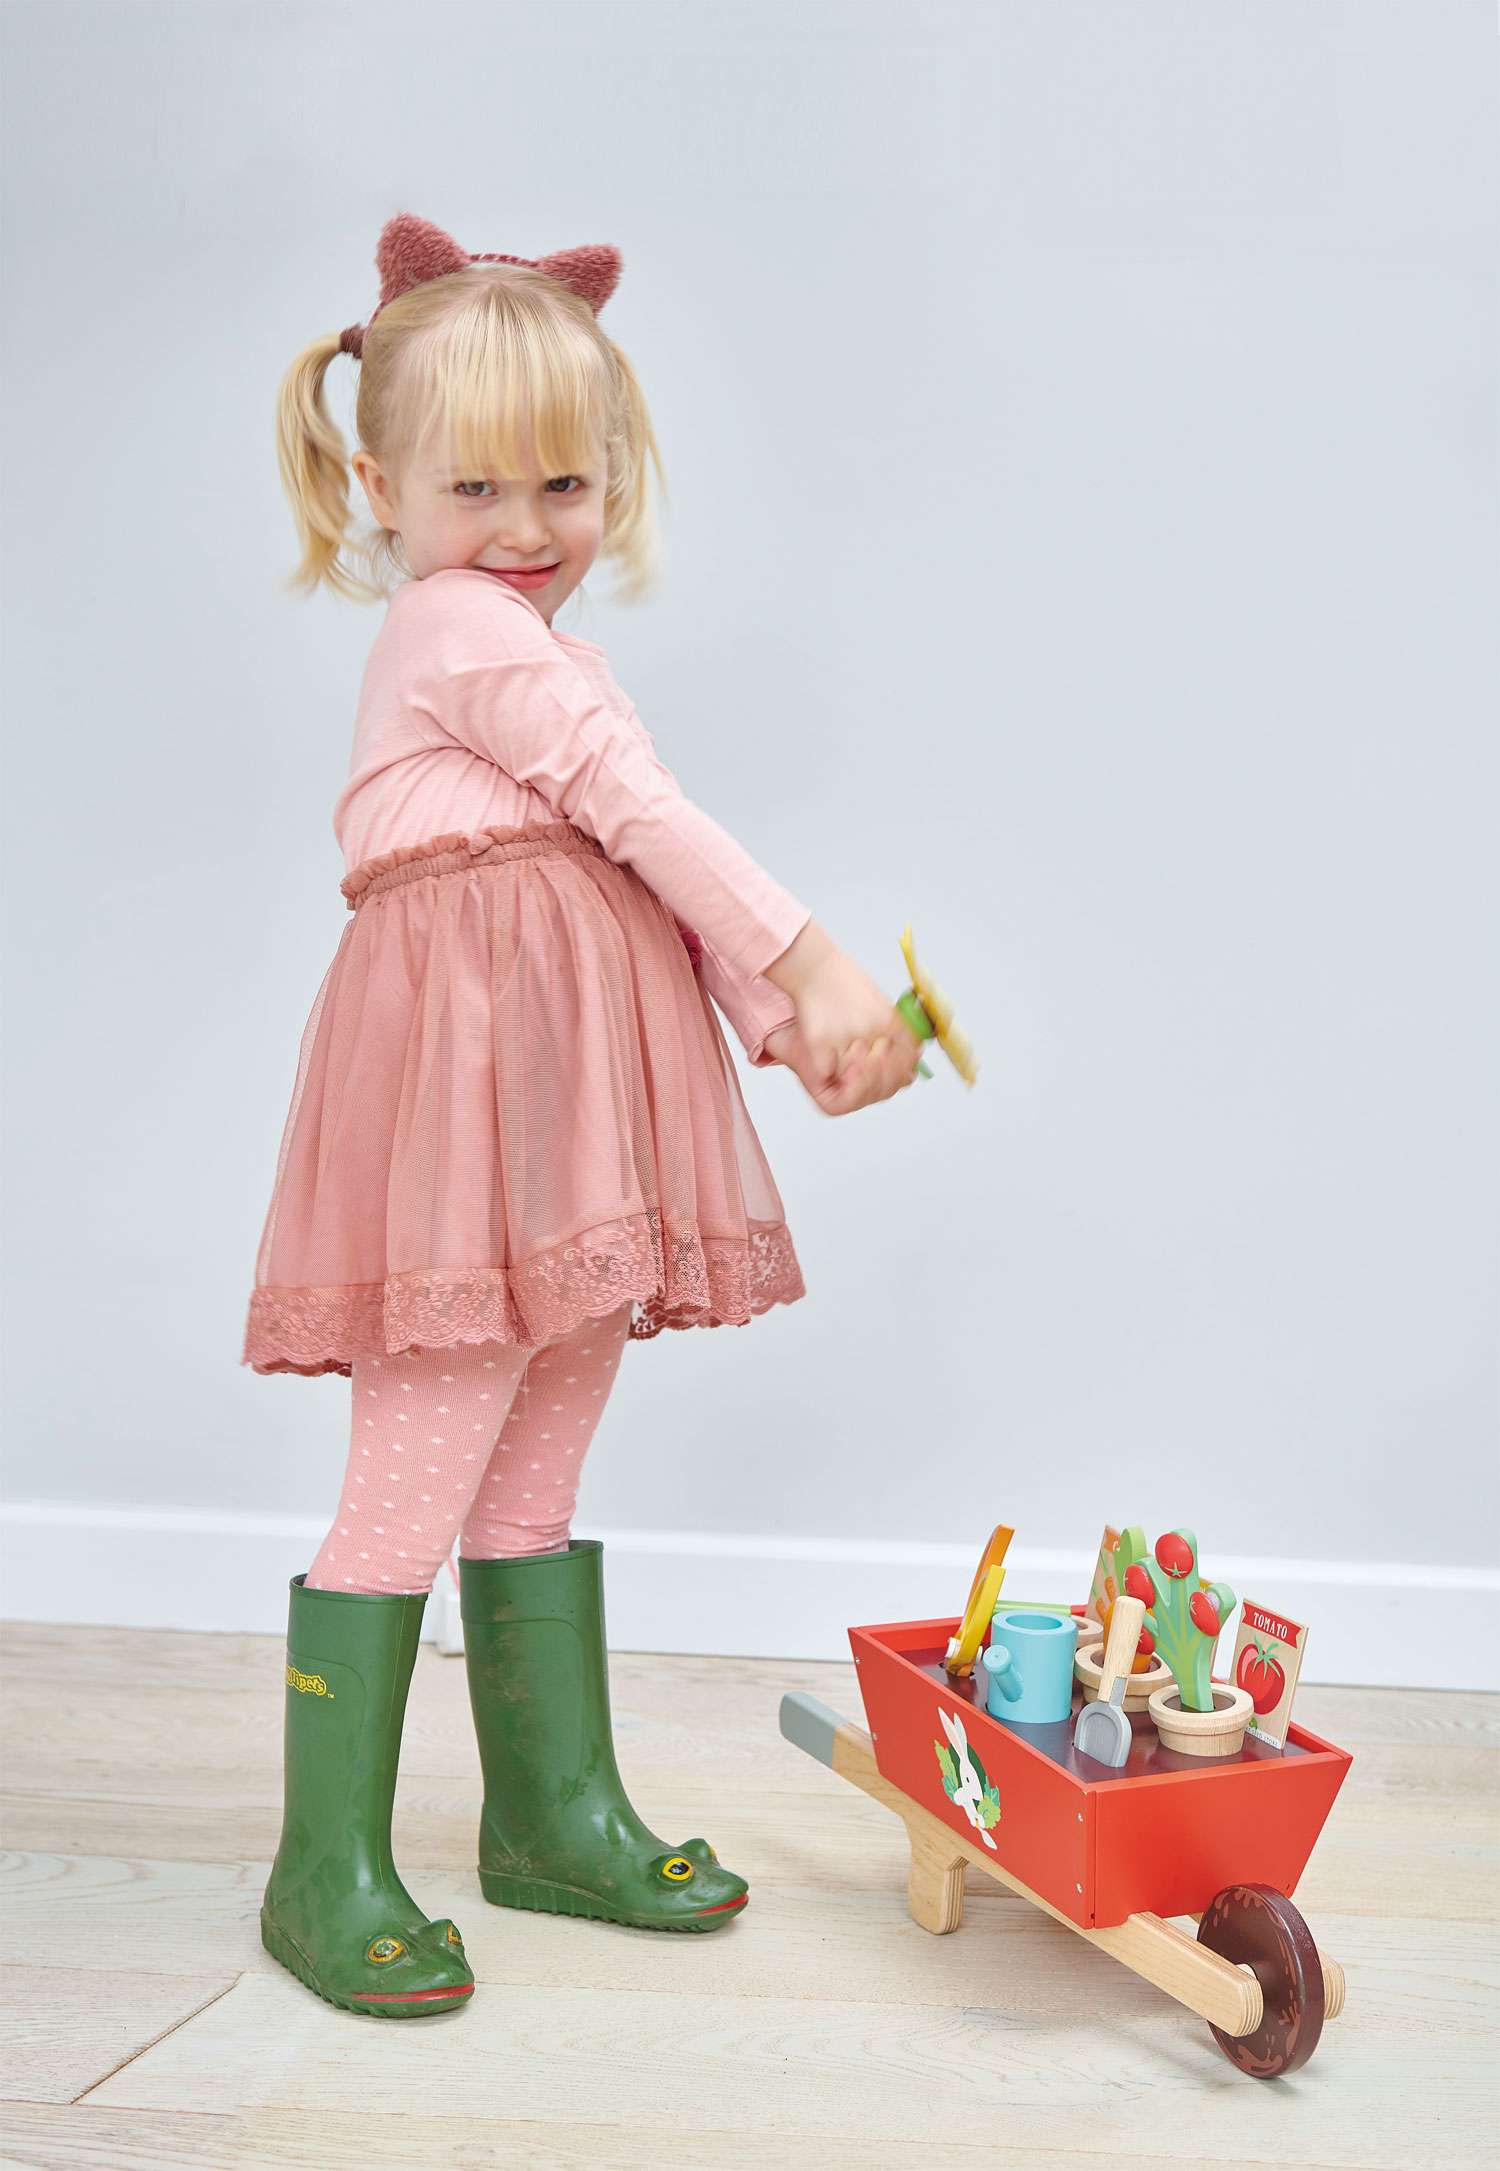 Tender Leaf Toys ของเล่นไม้ ของเล่นเด็ก ชุดรถทำสวน Garden Wheelbarrow Set